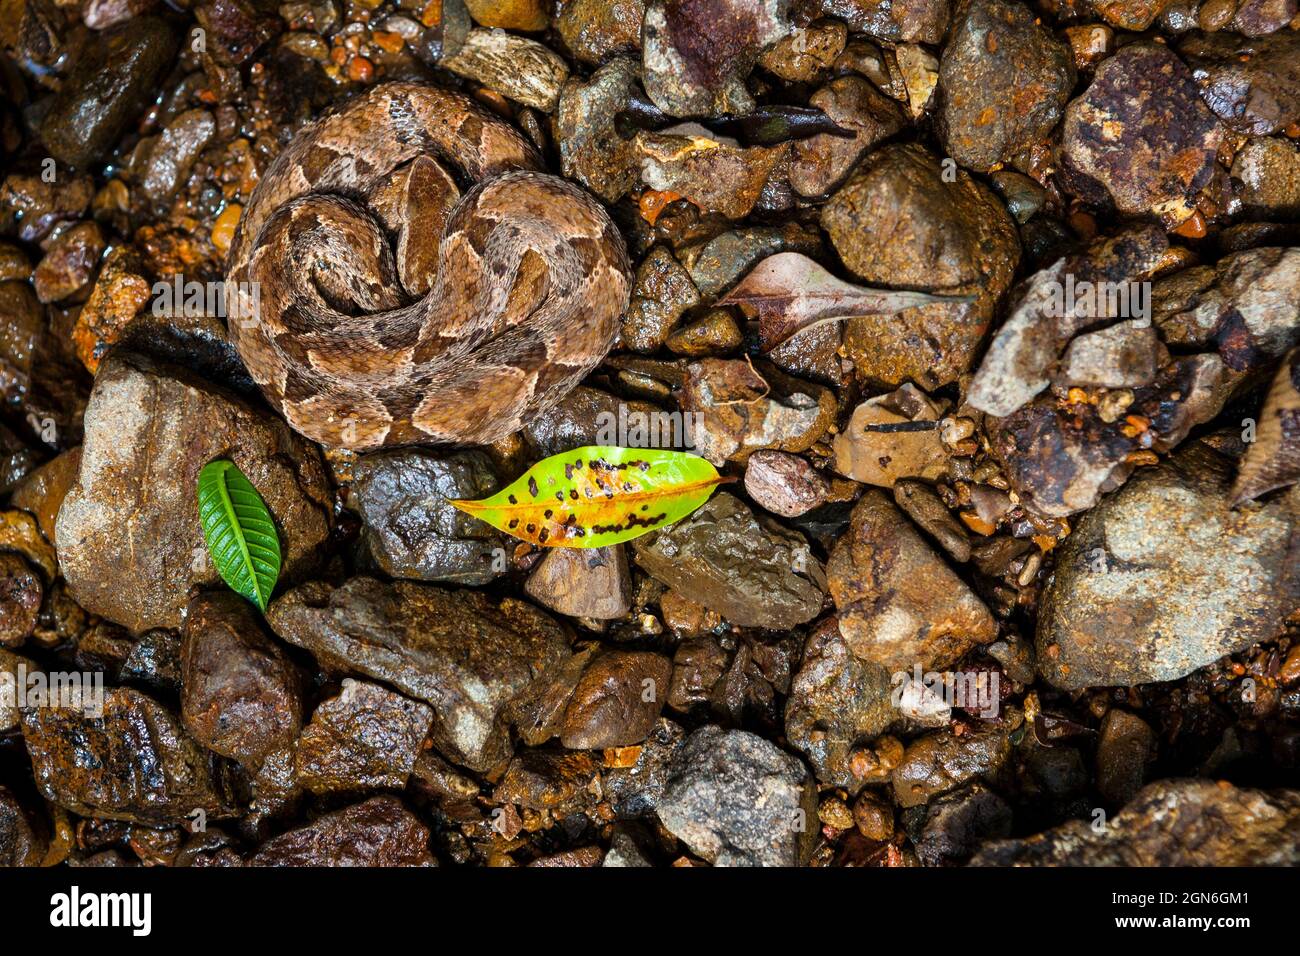 A venomous Fer-de-lance snake, Bothrops asper, hidden among stones along the old Camino Real trail, Chagres National Park, Republic of Panama. Stock Photo